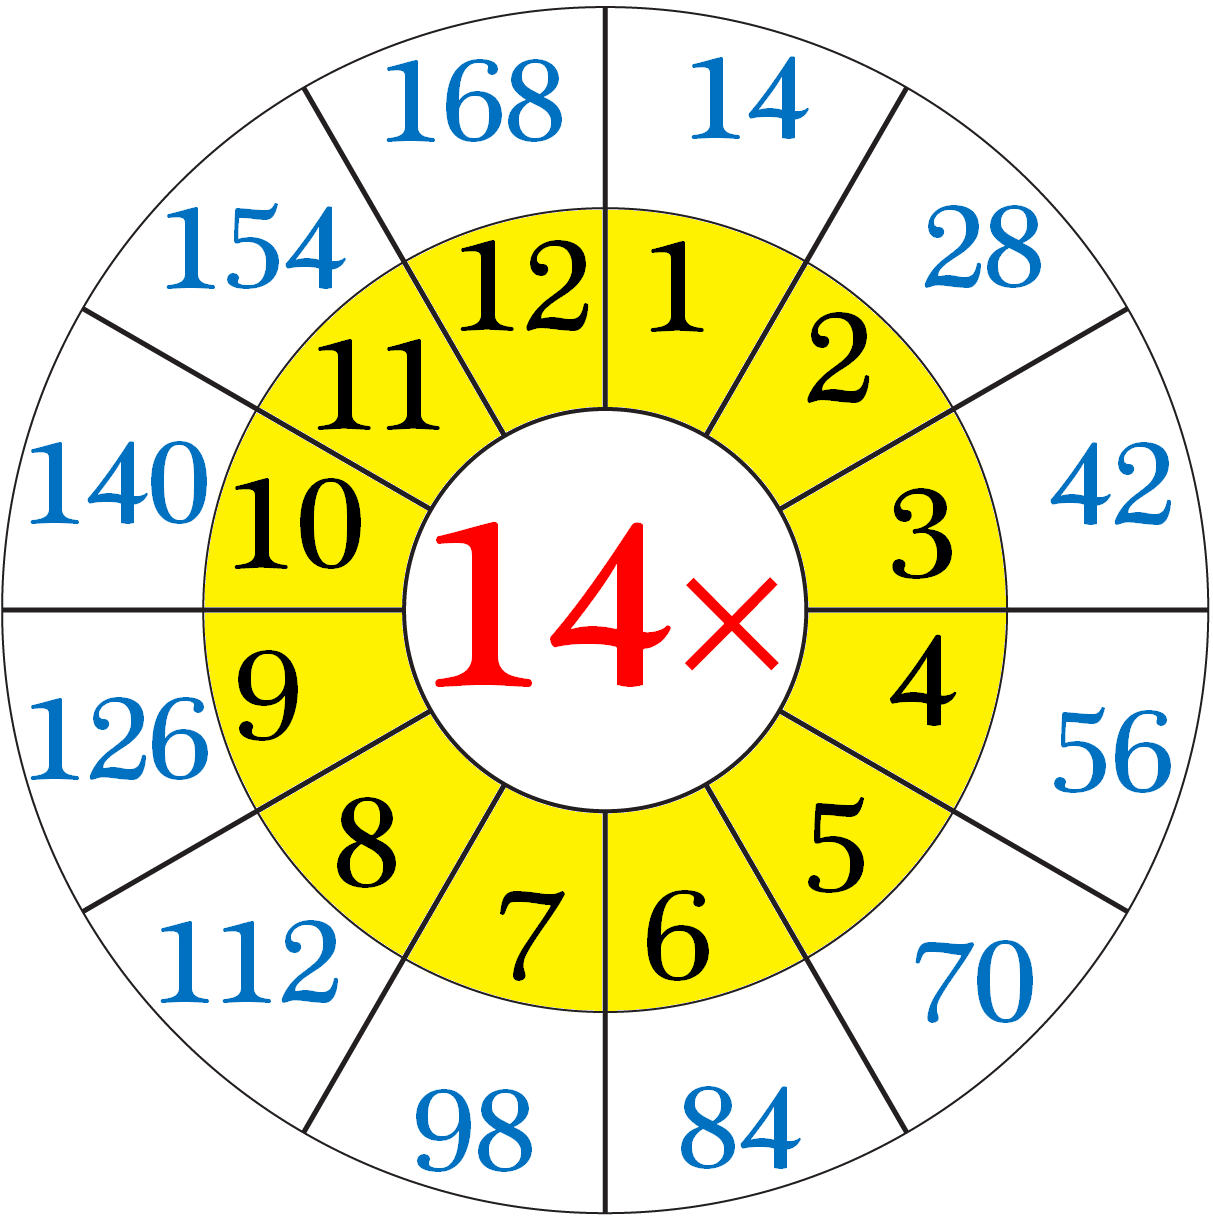 Multiplication Table of Fourteen